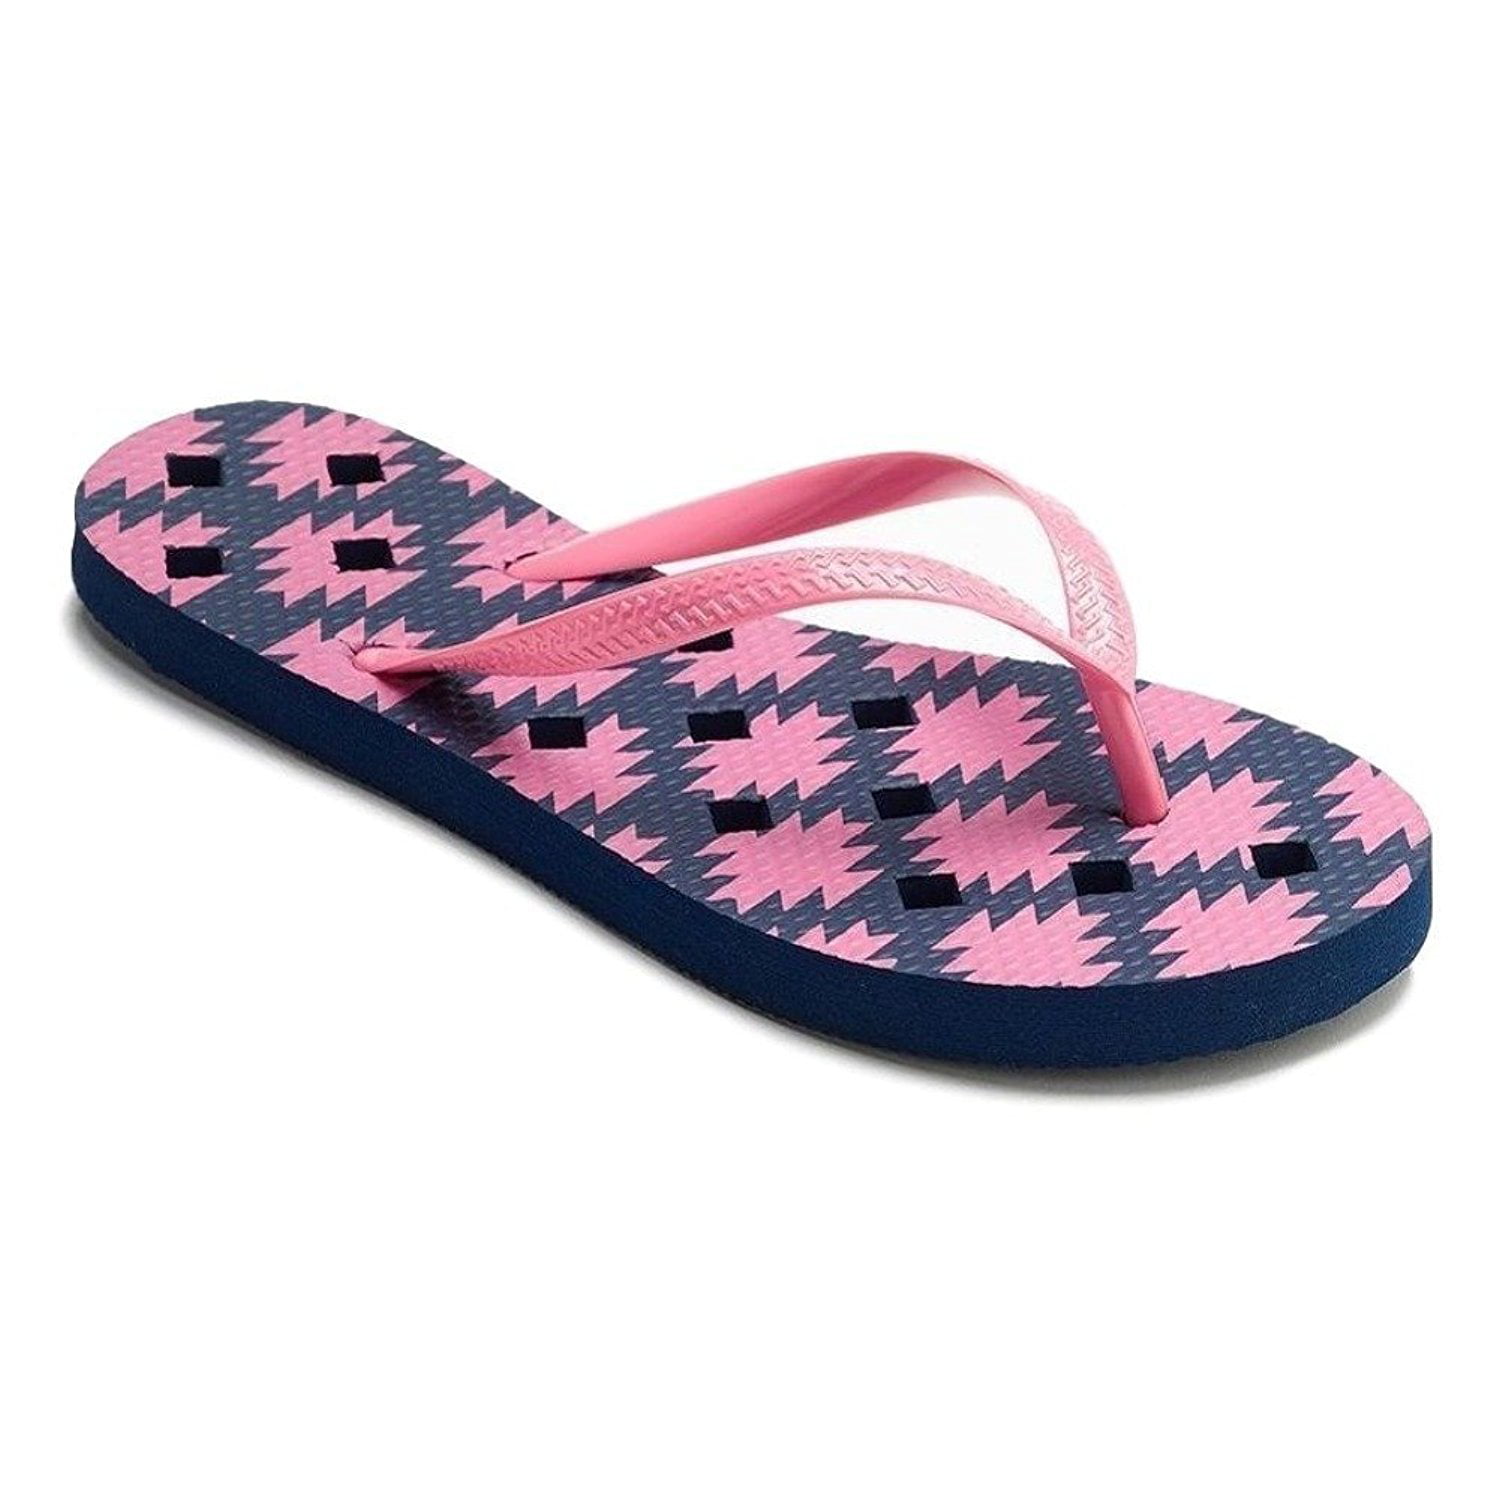 COL DOM Flip Flops Retro Grunge Sandals Beach Slippers for Men/Women 